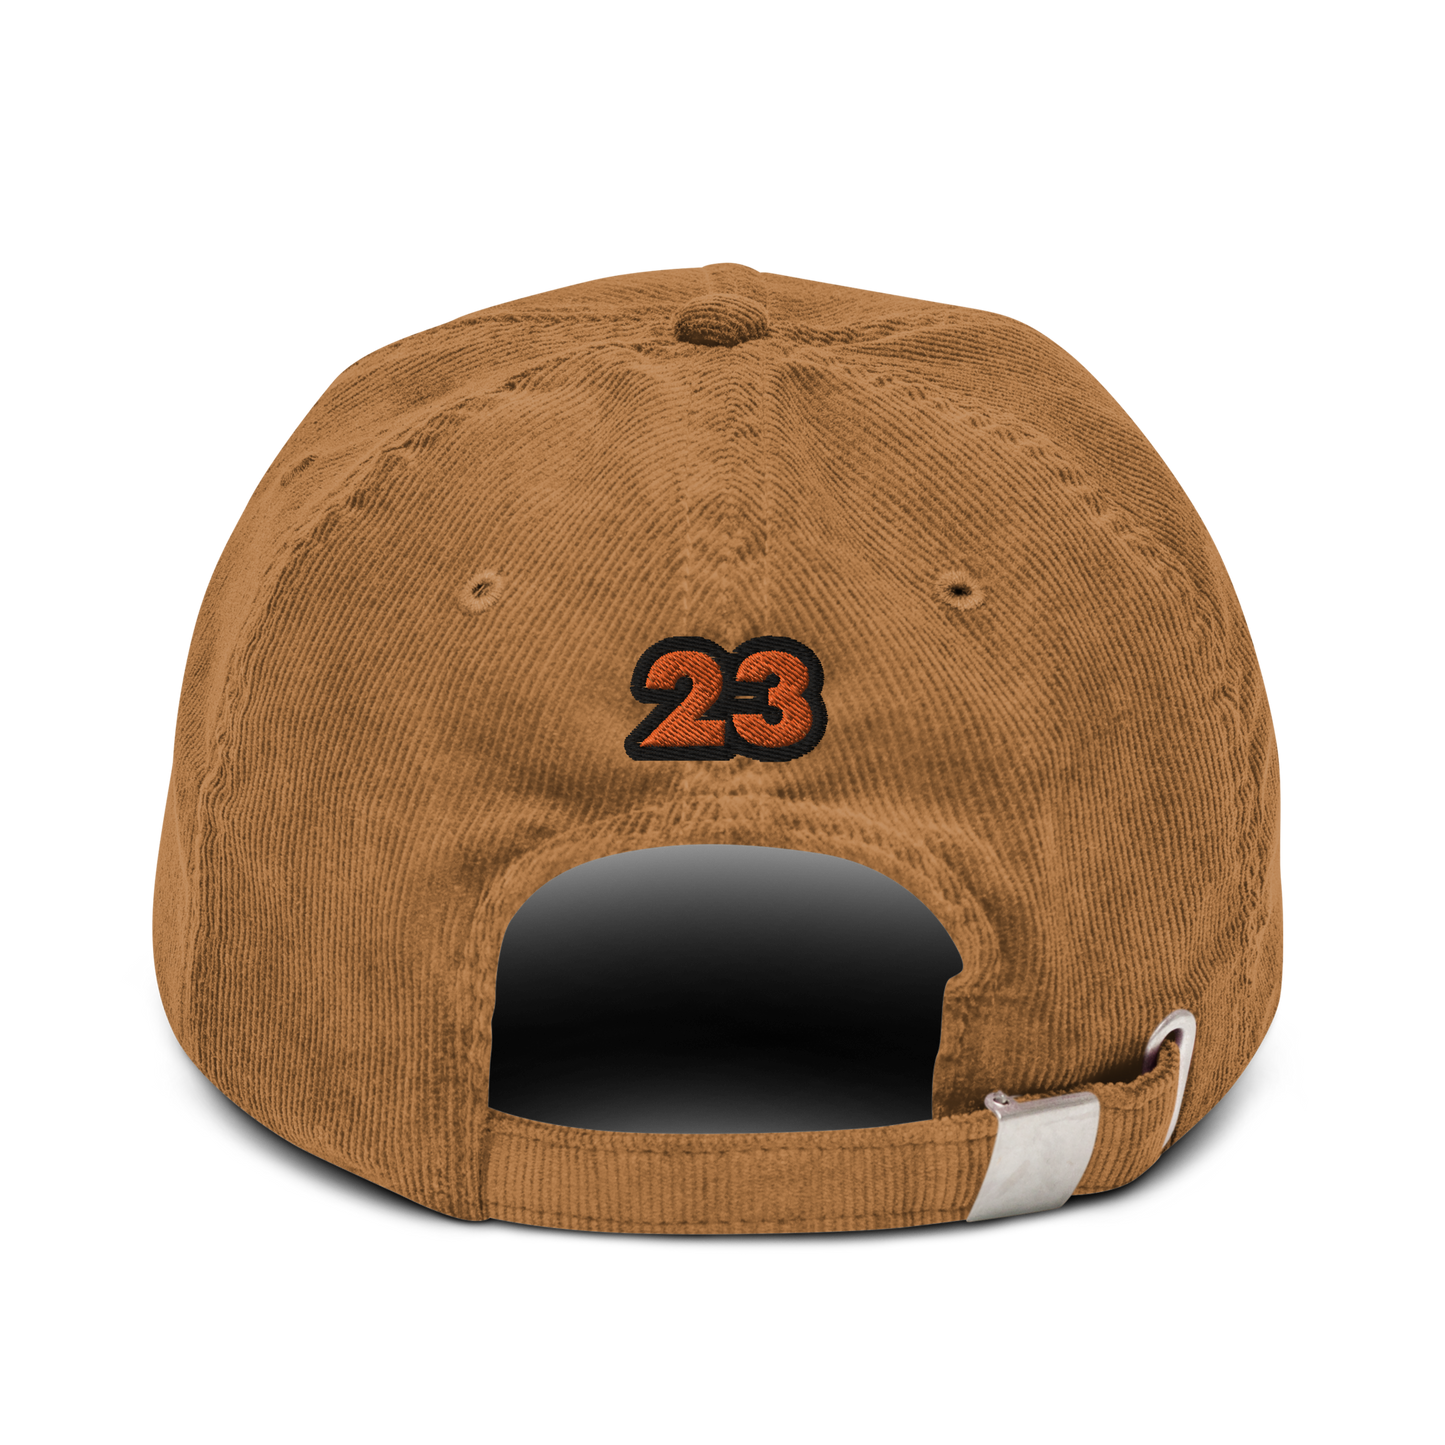 Buds 2023 Corduroy hat